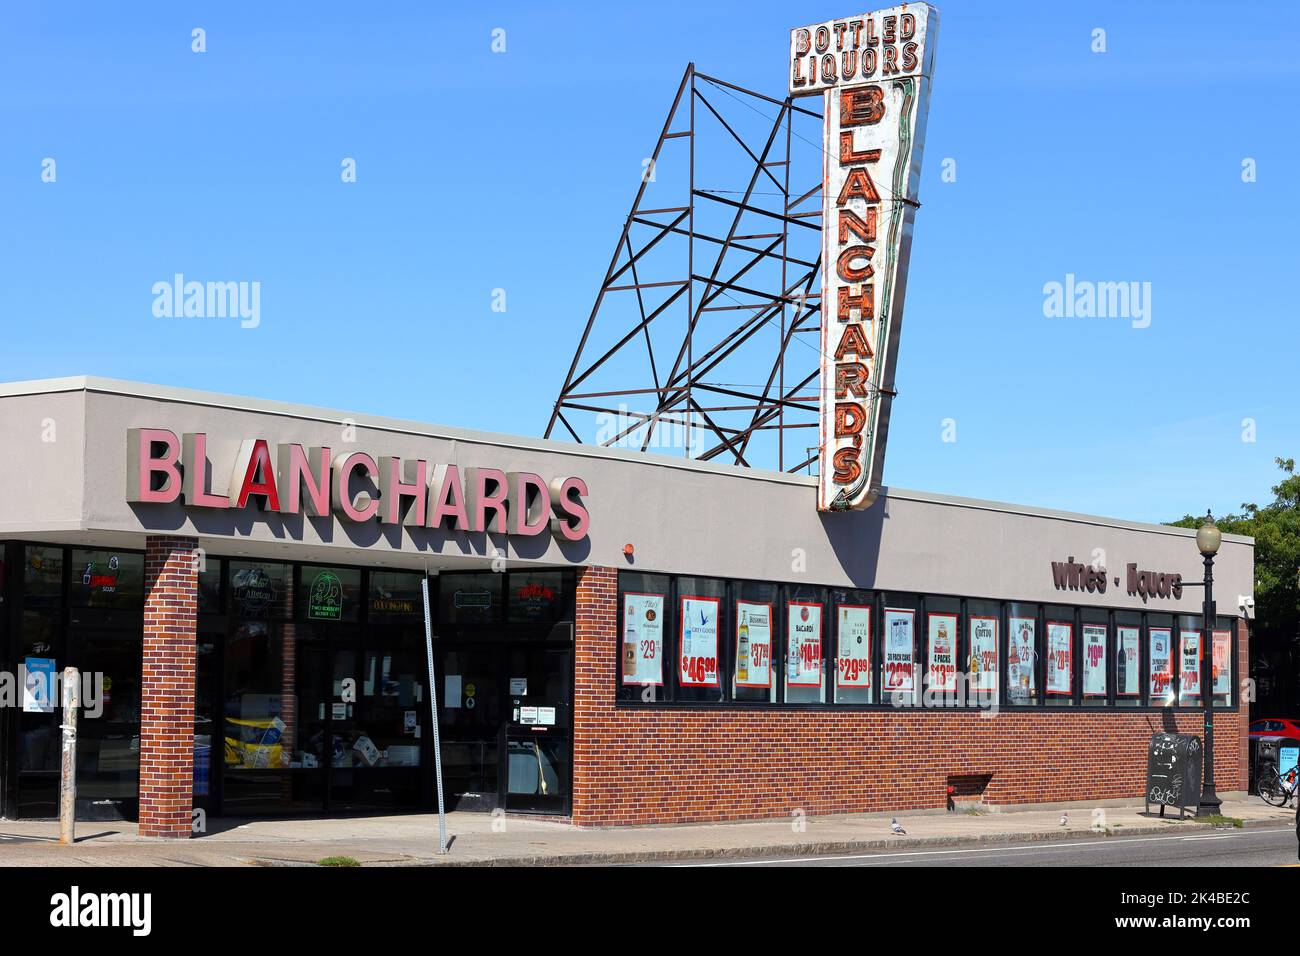 Blanchard's, 103 Harvard Ave, Boston Foto del escaparate de una tienda de licores en Allston, Massachusetts. Foto de stock